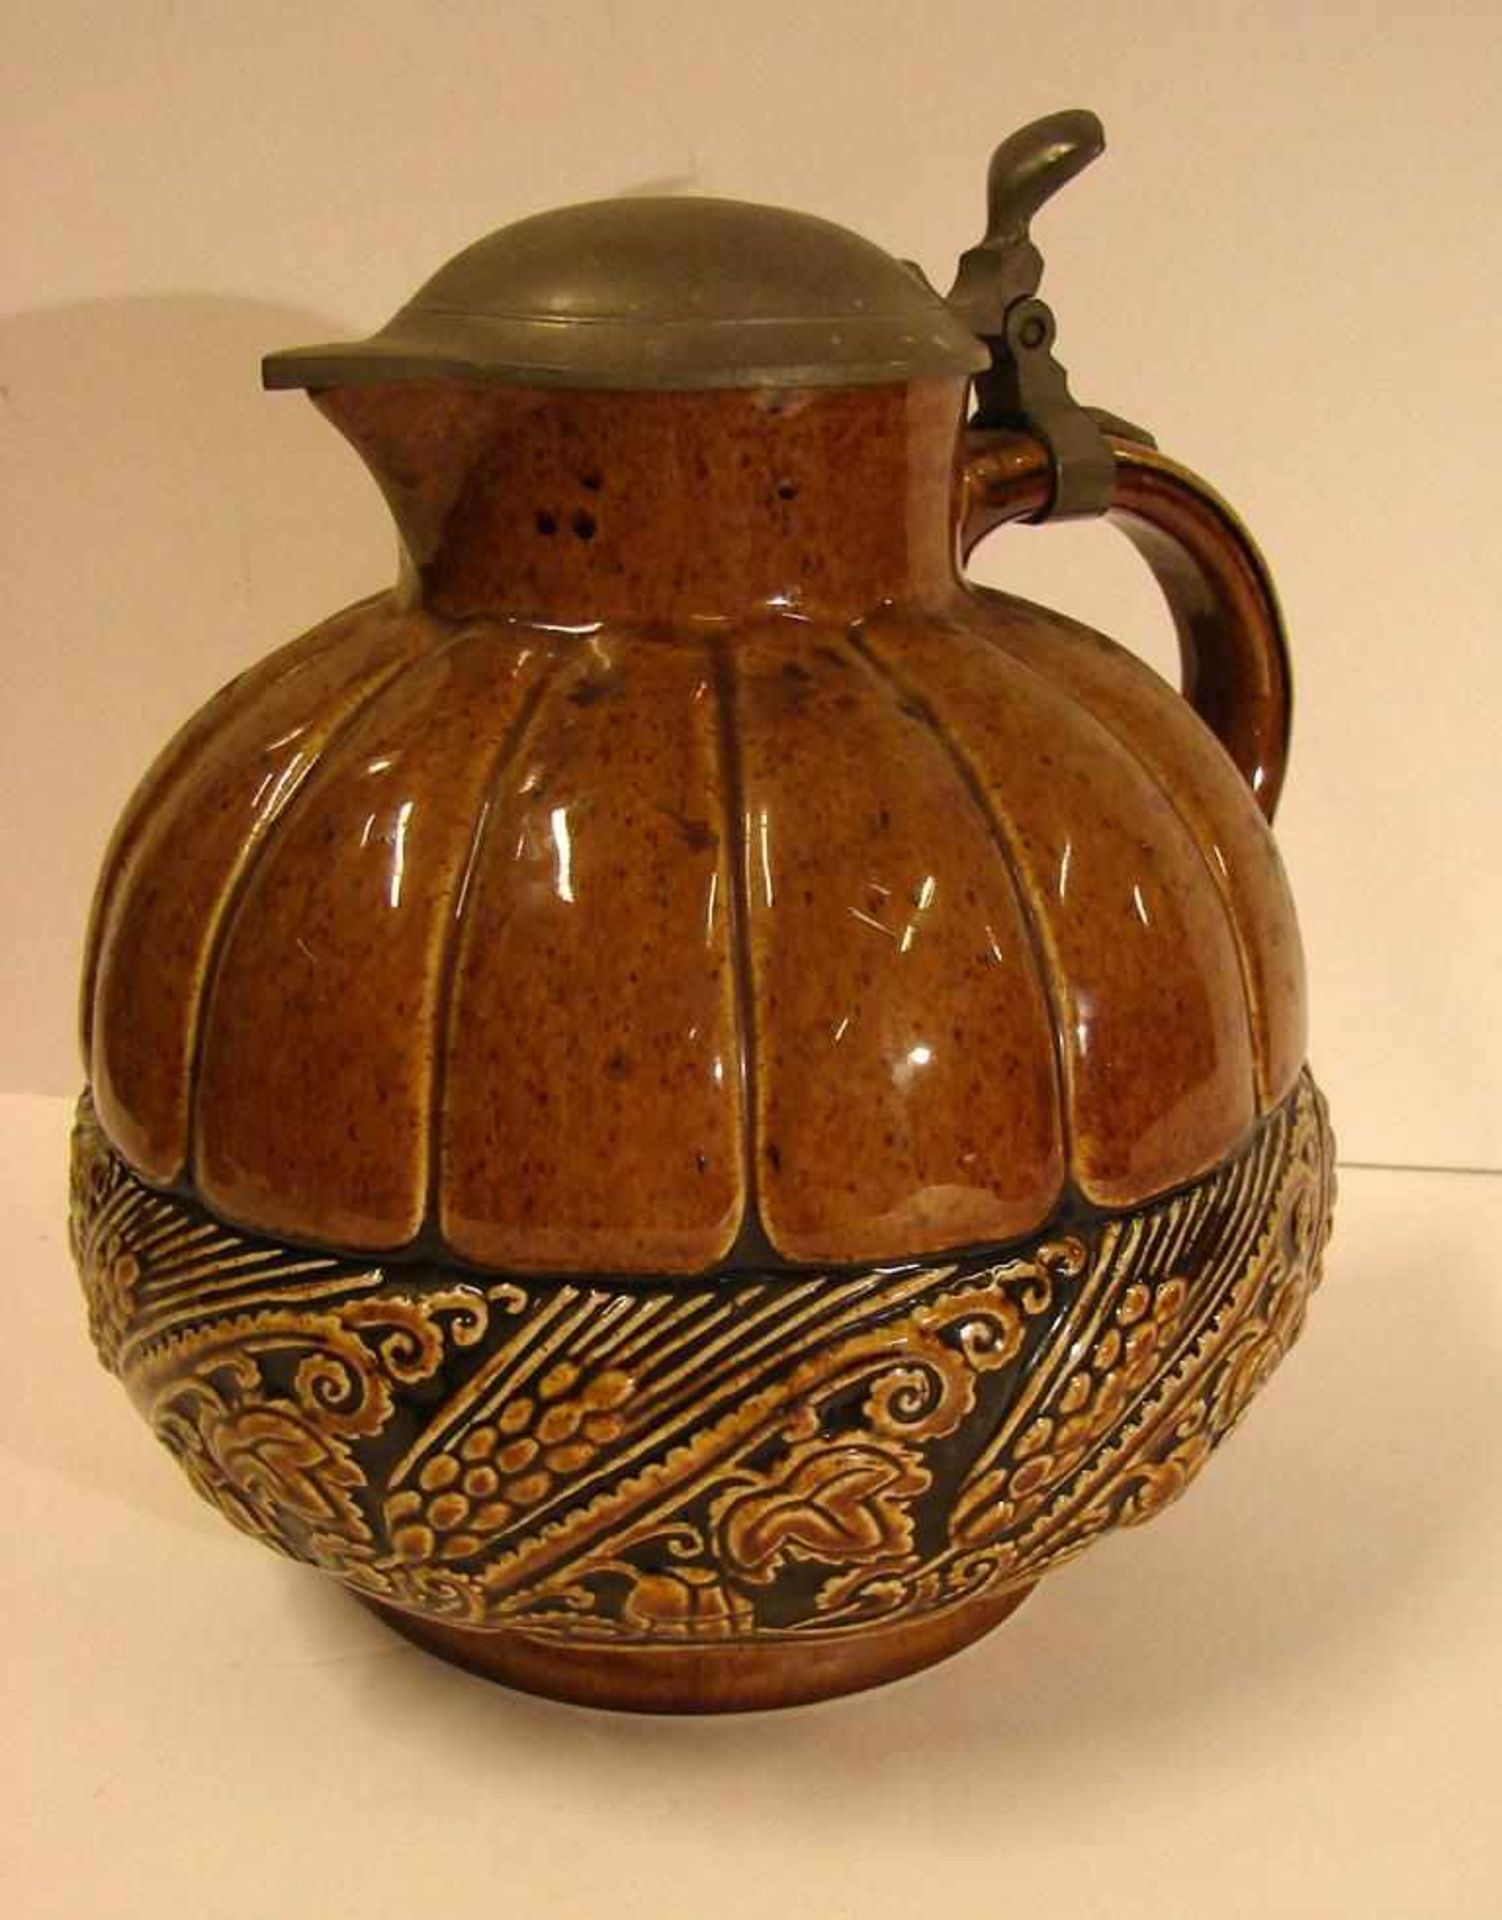 Krug mit Zinndeckel, Keramik, Marke Höhr, H. ca. 23 cm - Image 2 of 2